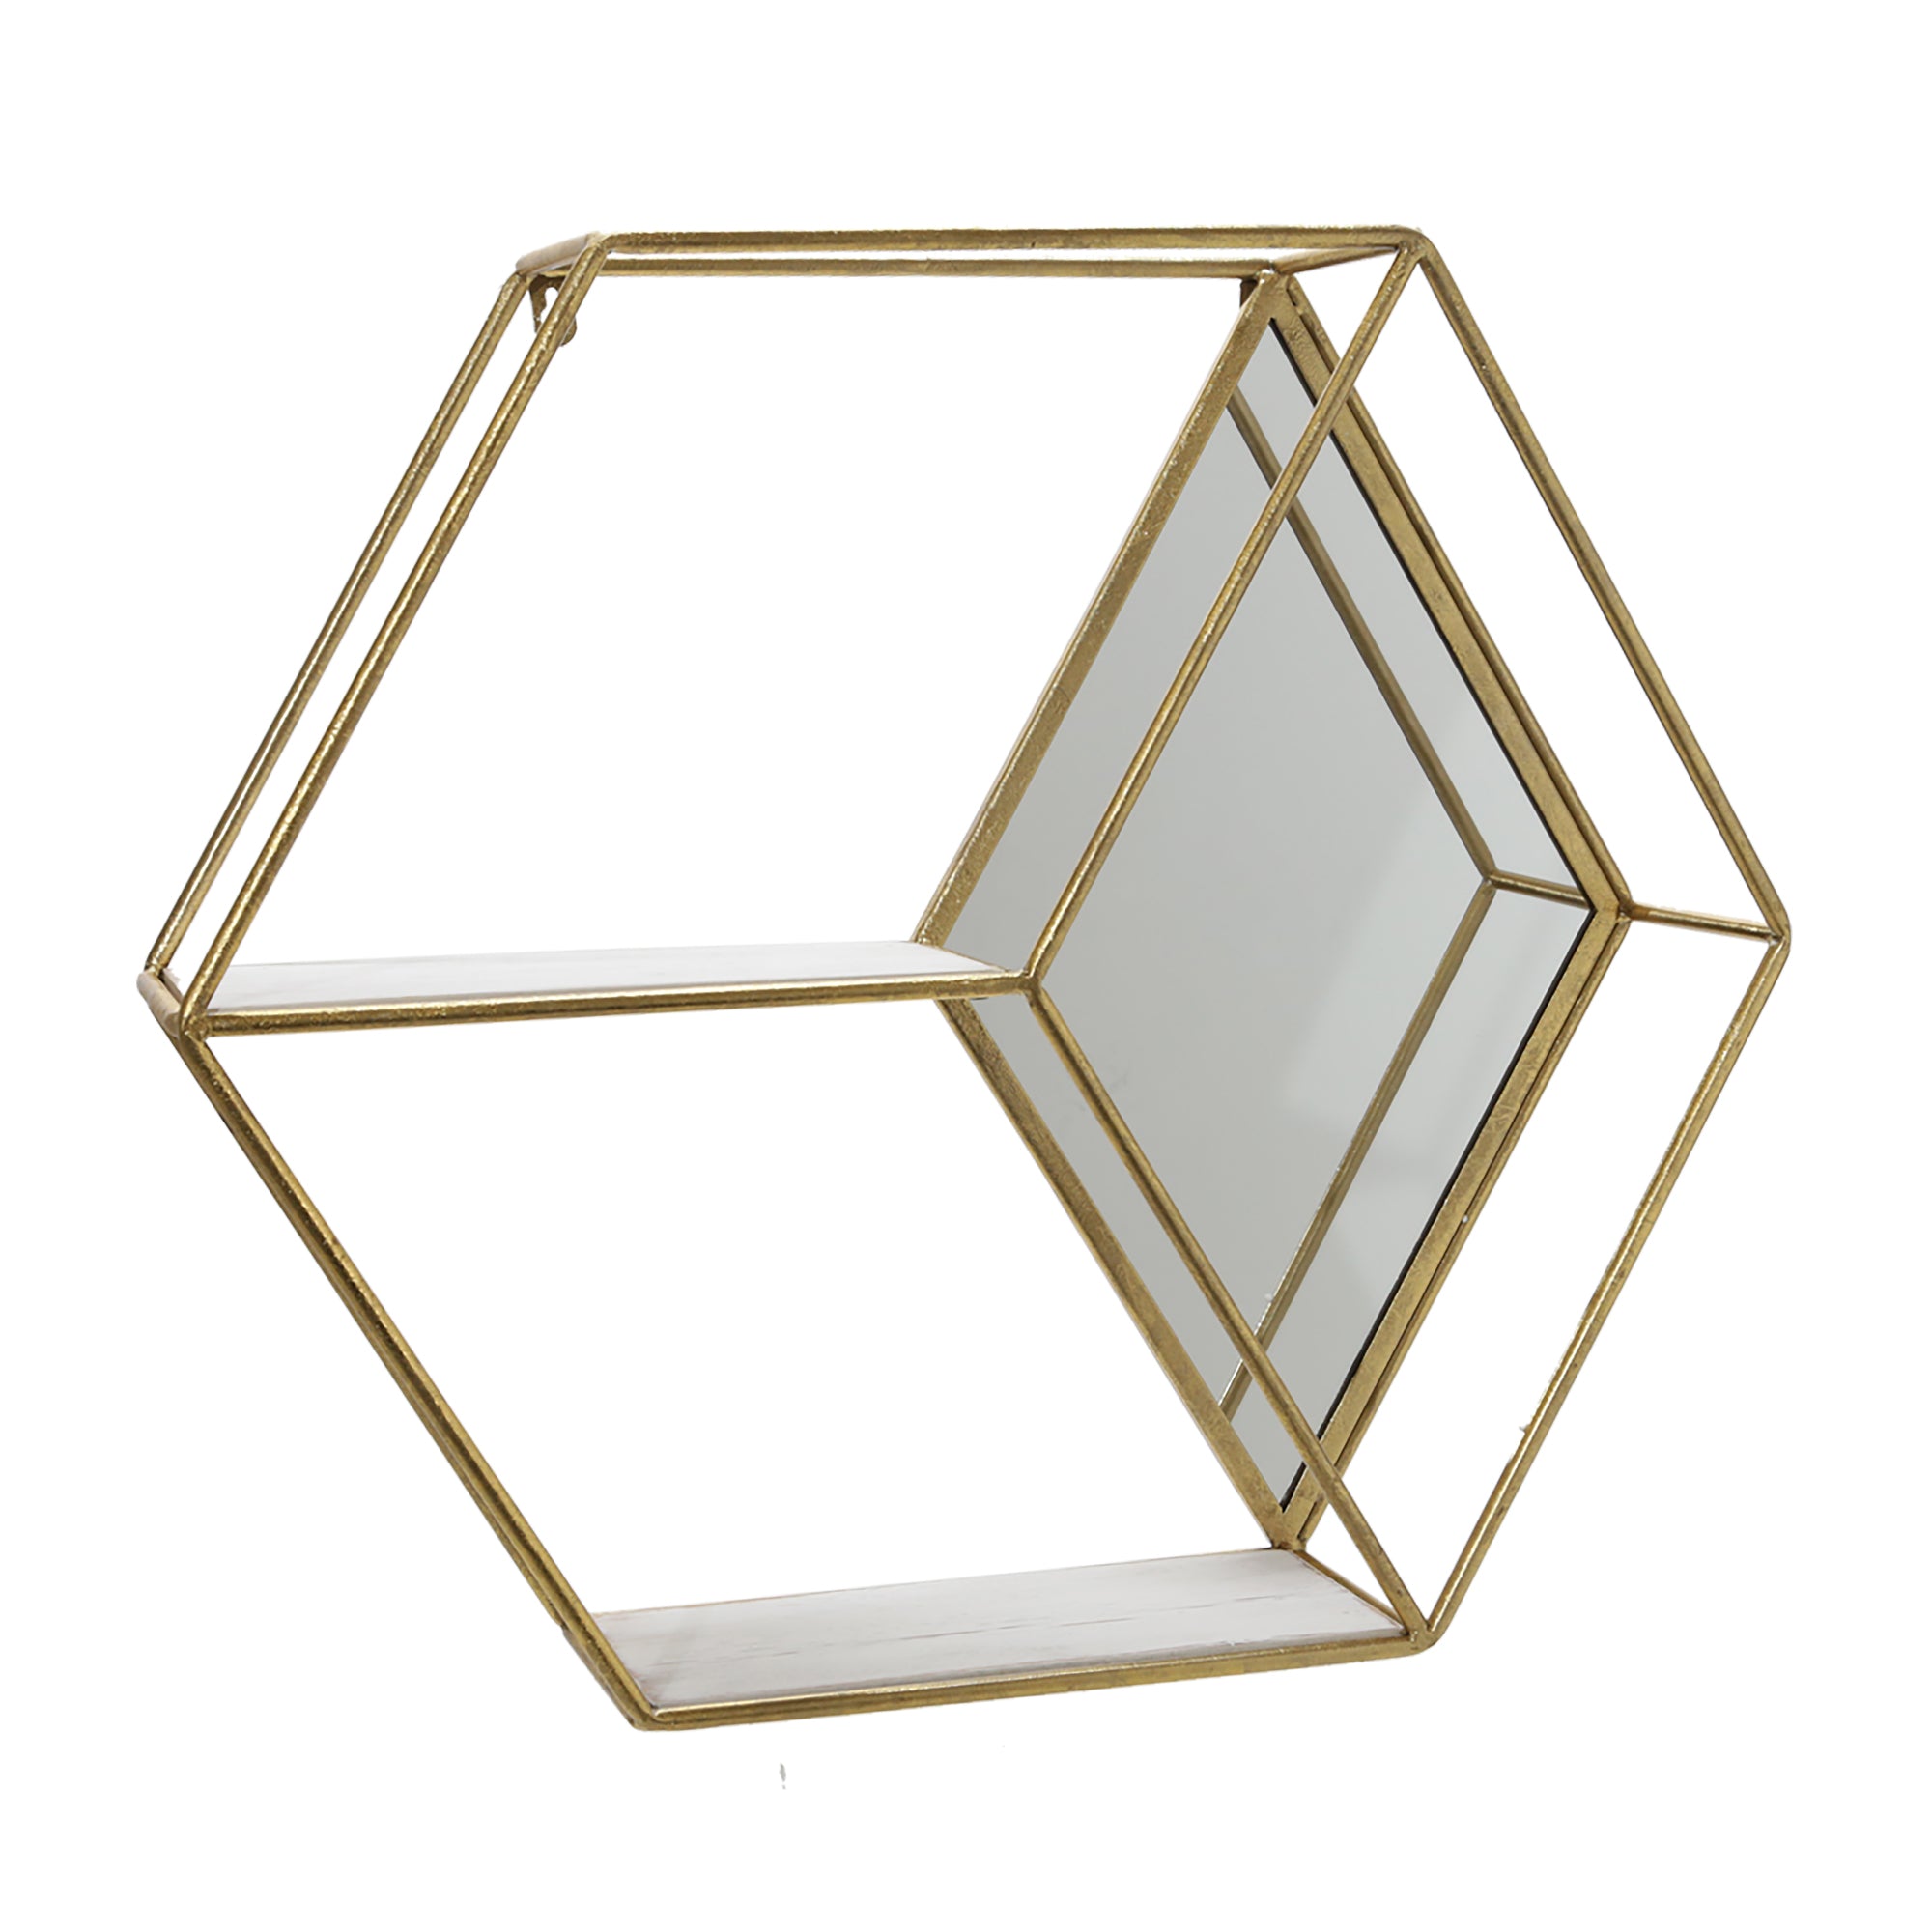 20" Hexagon Mirrored Wall Shelf, Gold, Wall Storage